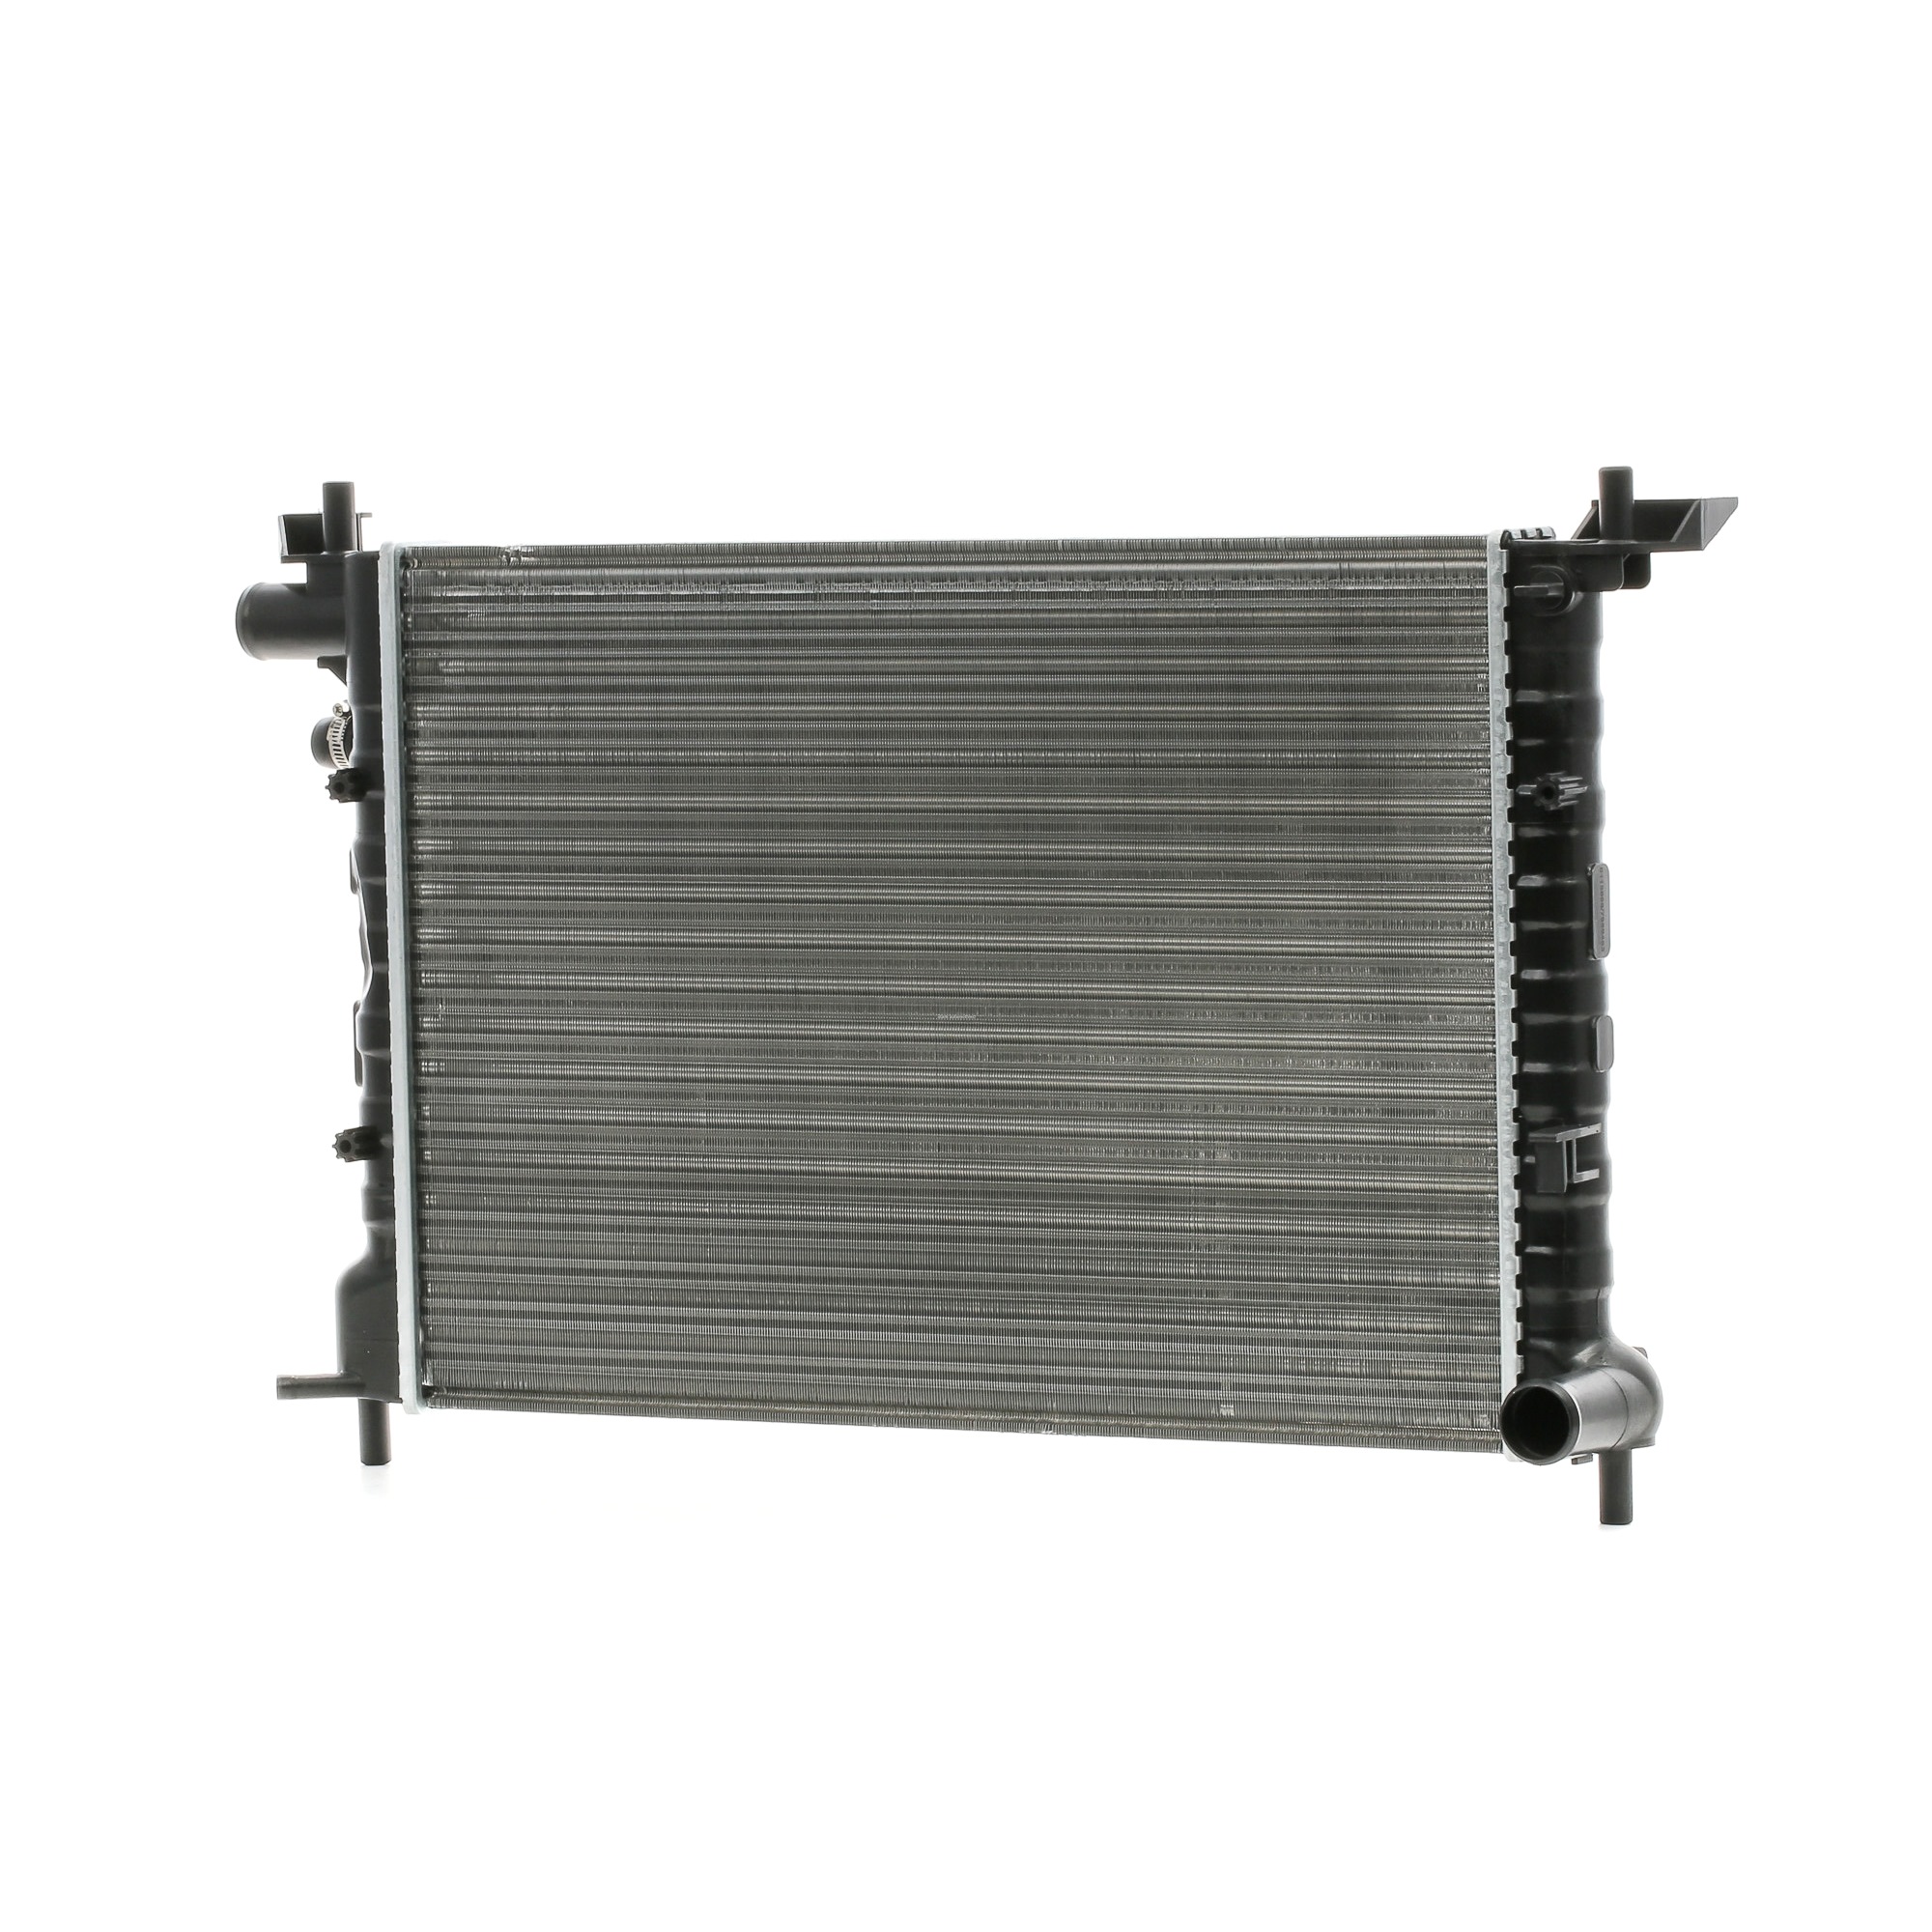 STARK SKRD-0120353 Engine radiator Aluminium, Plastic, for vehicles with air conditioning, Manual Transmission